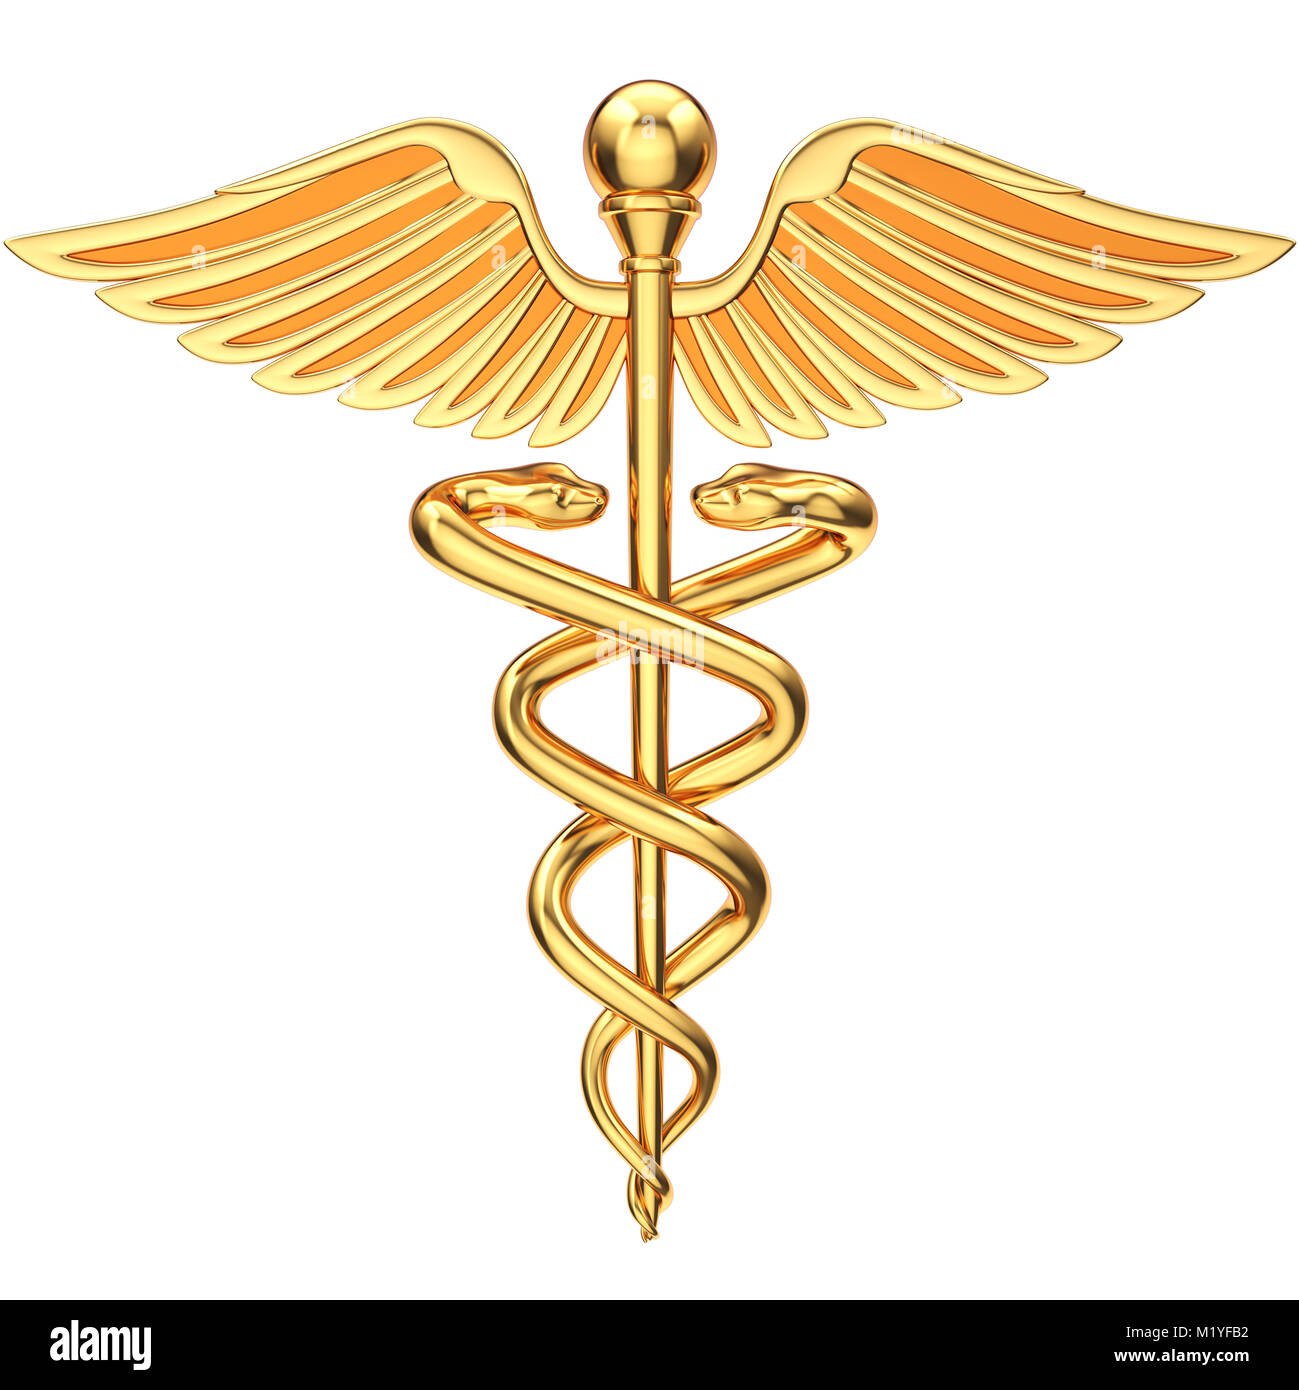 Golden caduceus. Medical symbol. 3D illustration Stock Photo